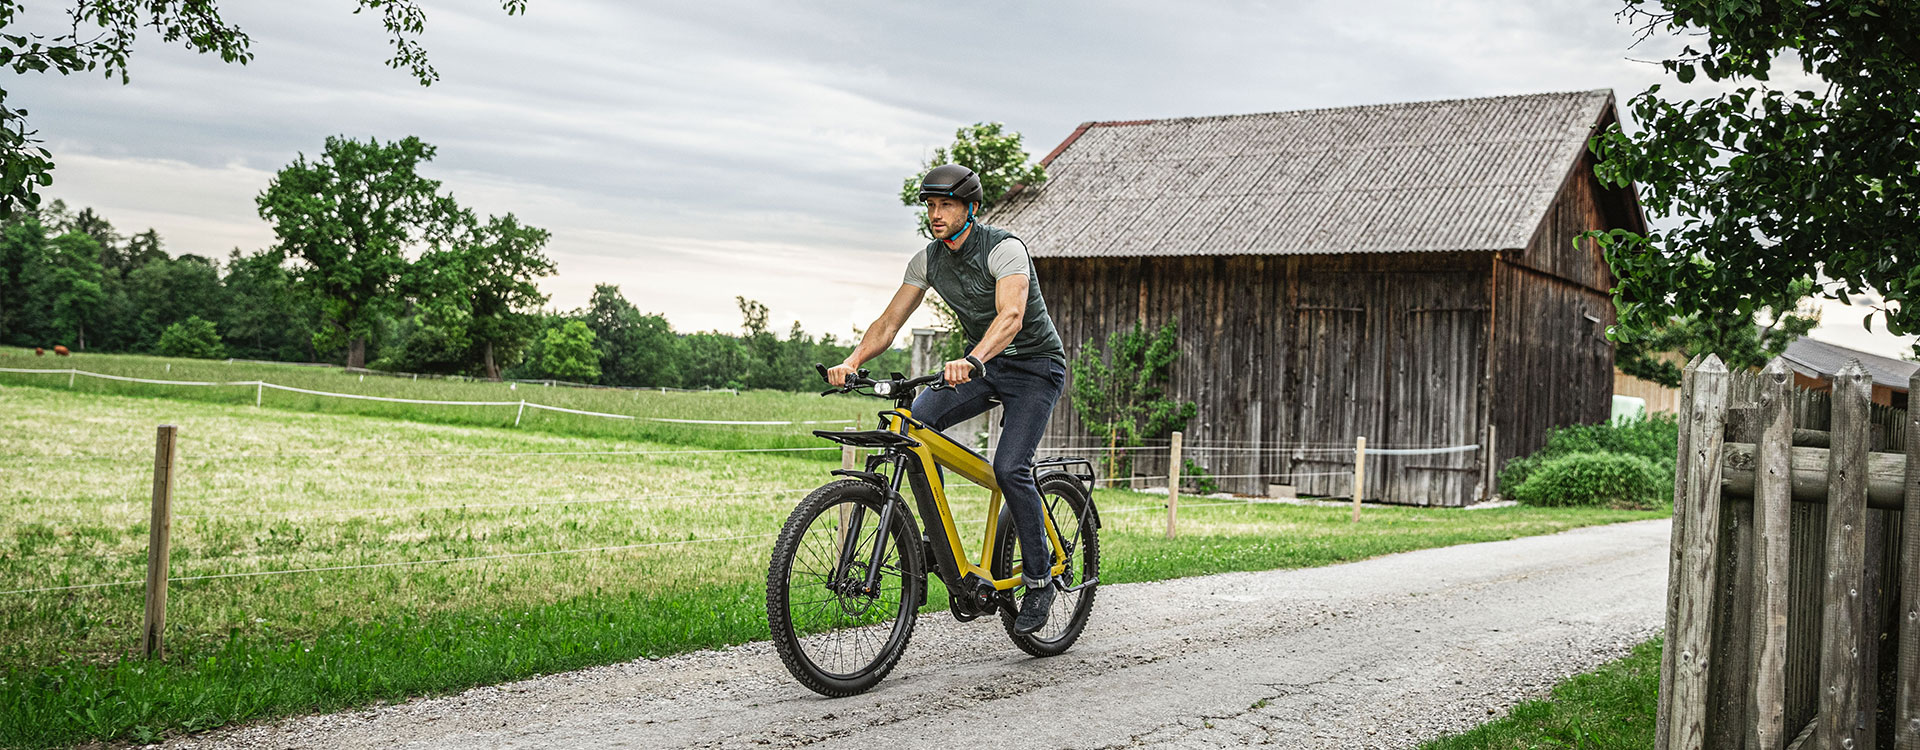 Riese & Müller Supercharger 2 - Premium e-bike - Elan Bikes - Ontspannen fietsen in de natuur.